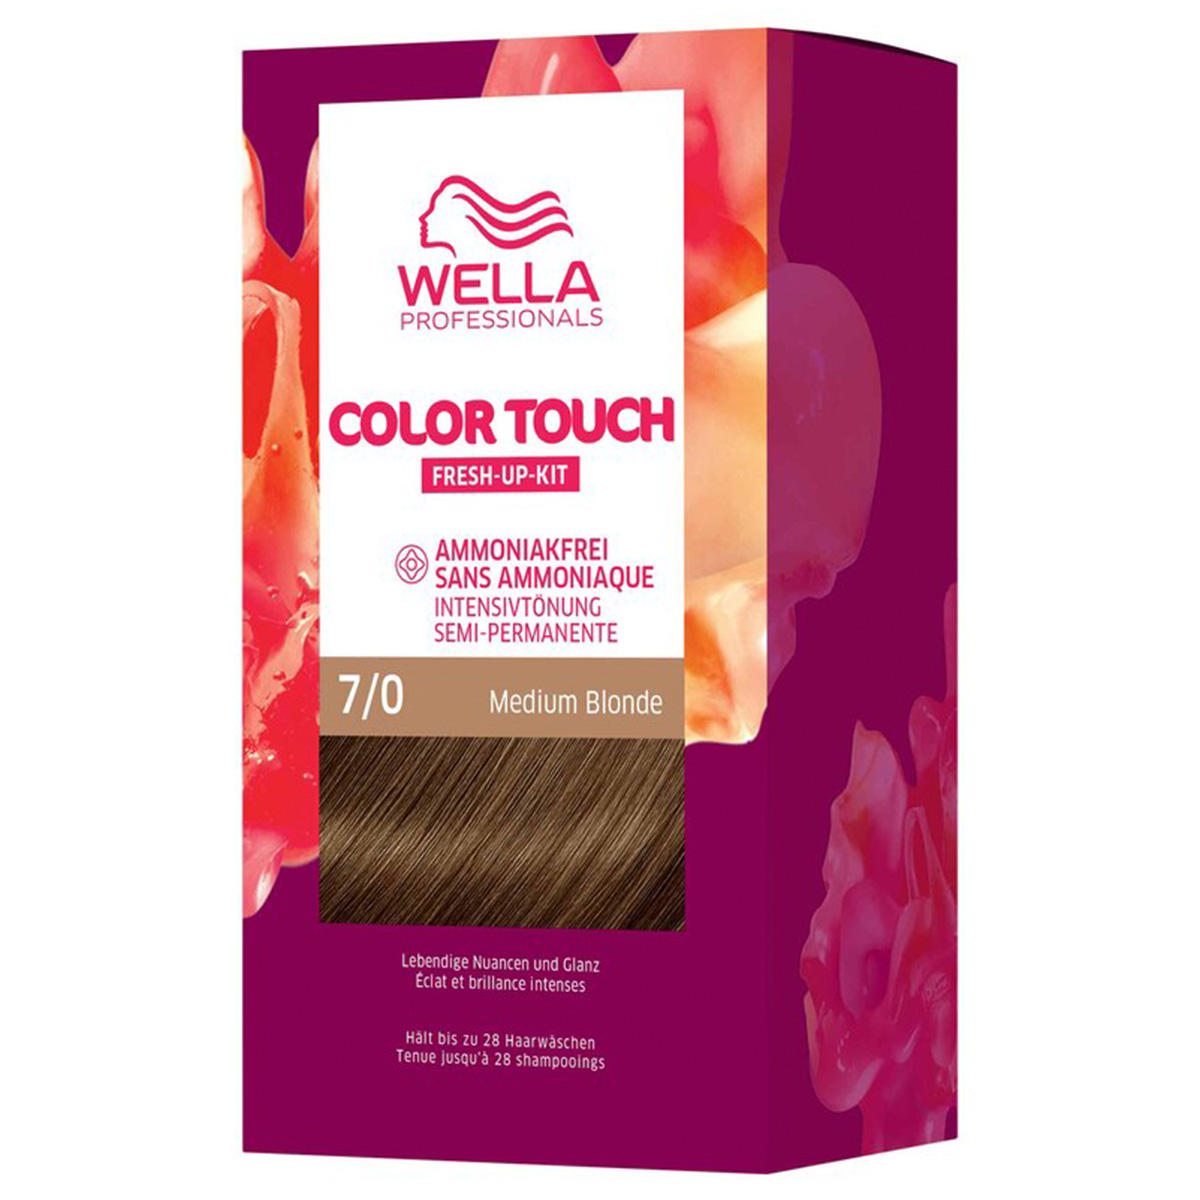 Wella Color Touch Fresh-Up-Kit 7/0 Medium blond 130 ml - 1